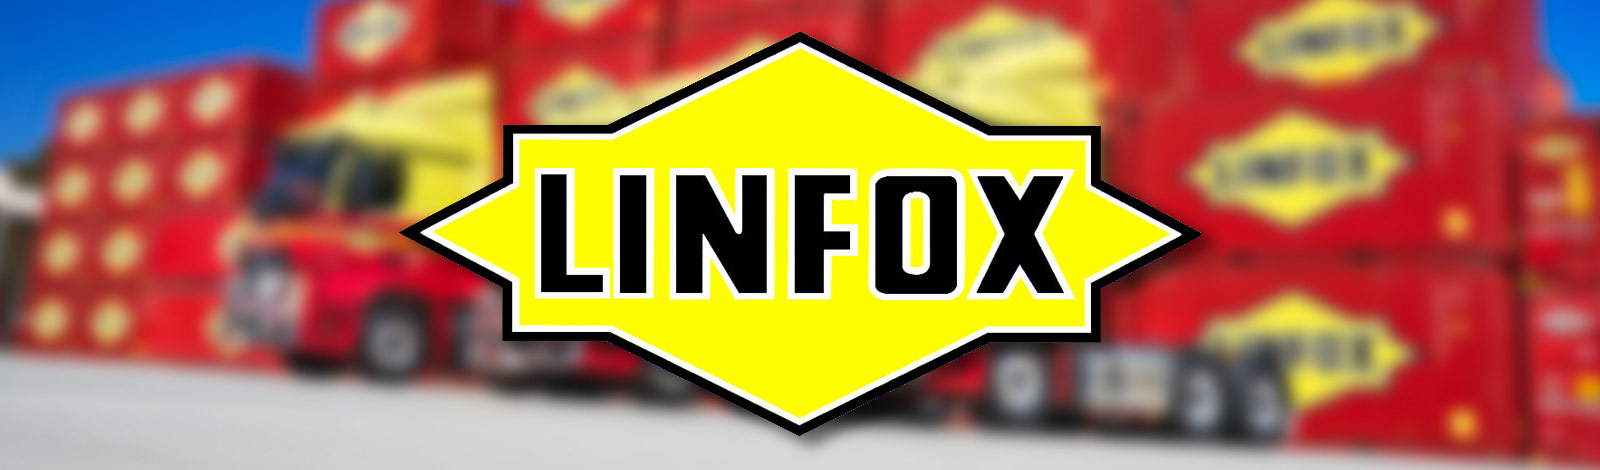 linfox-challenges-fuel-tax-goautonews-premium